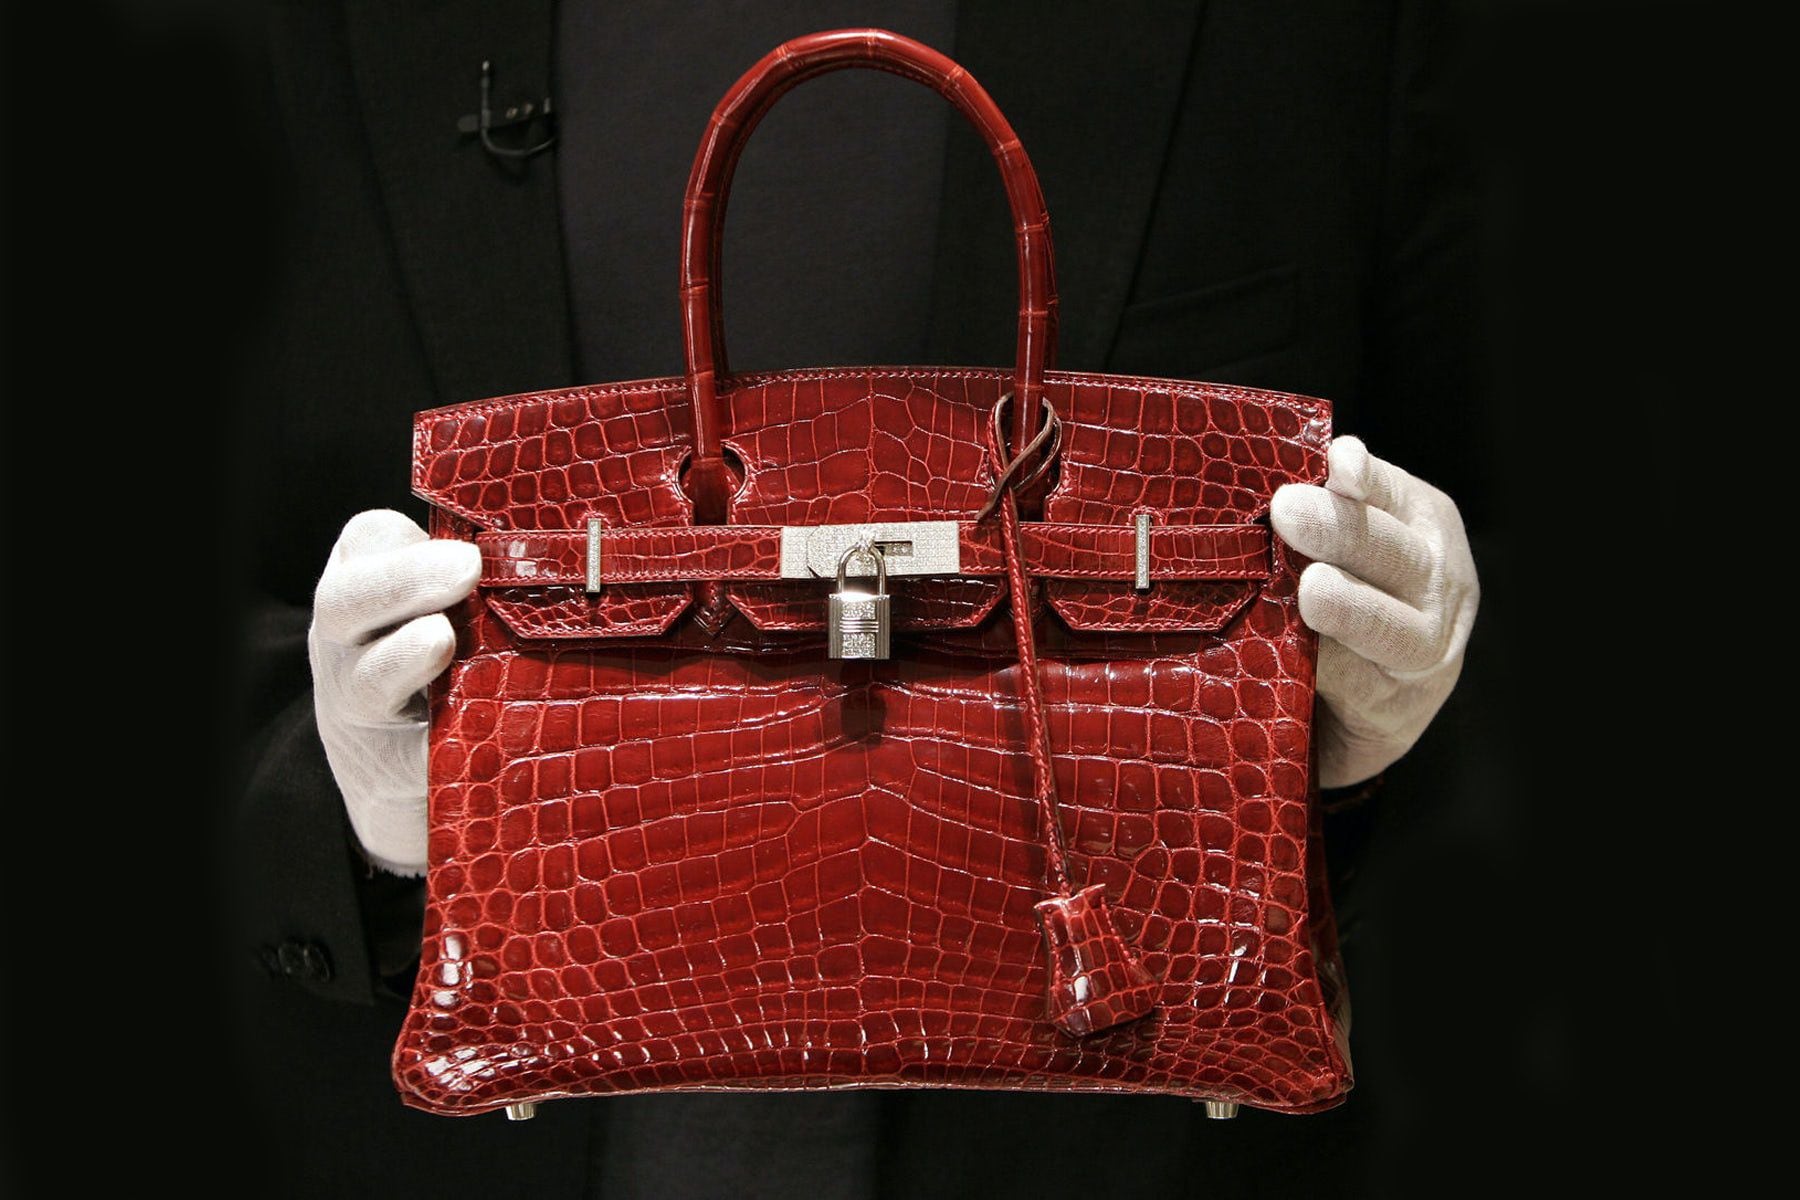 Hermès Can Surpass Vuitton as Luxury’s Biggest Brand, Citi Says